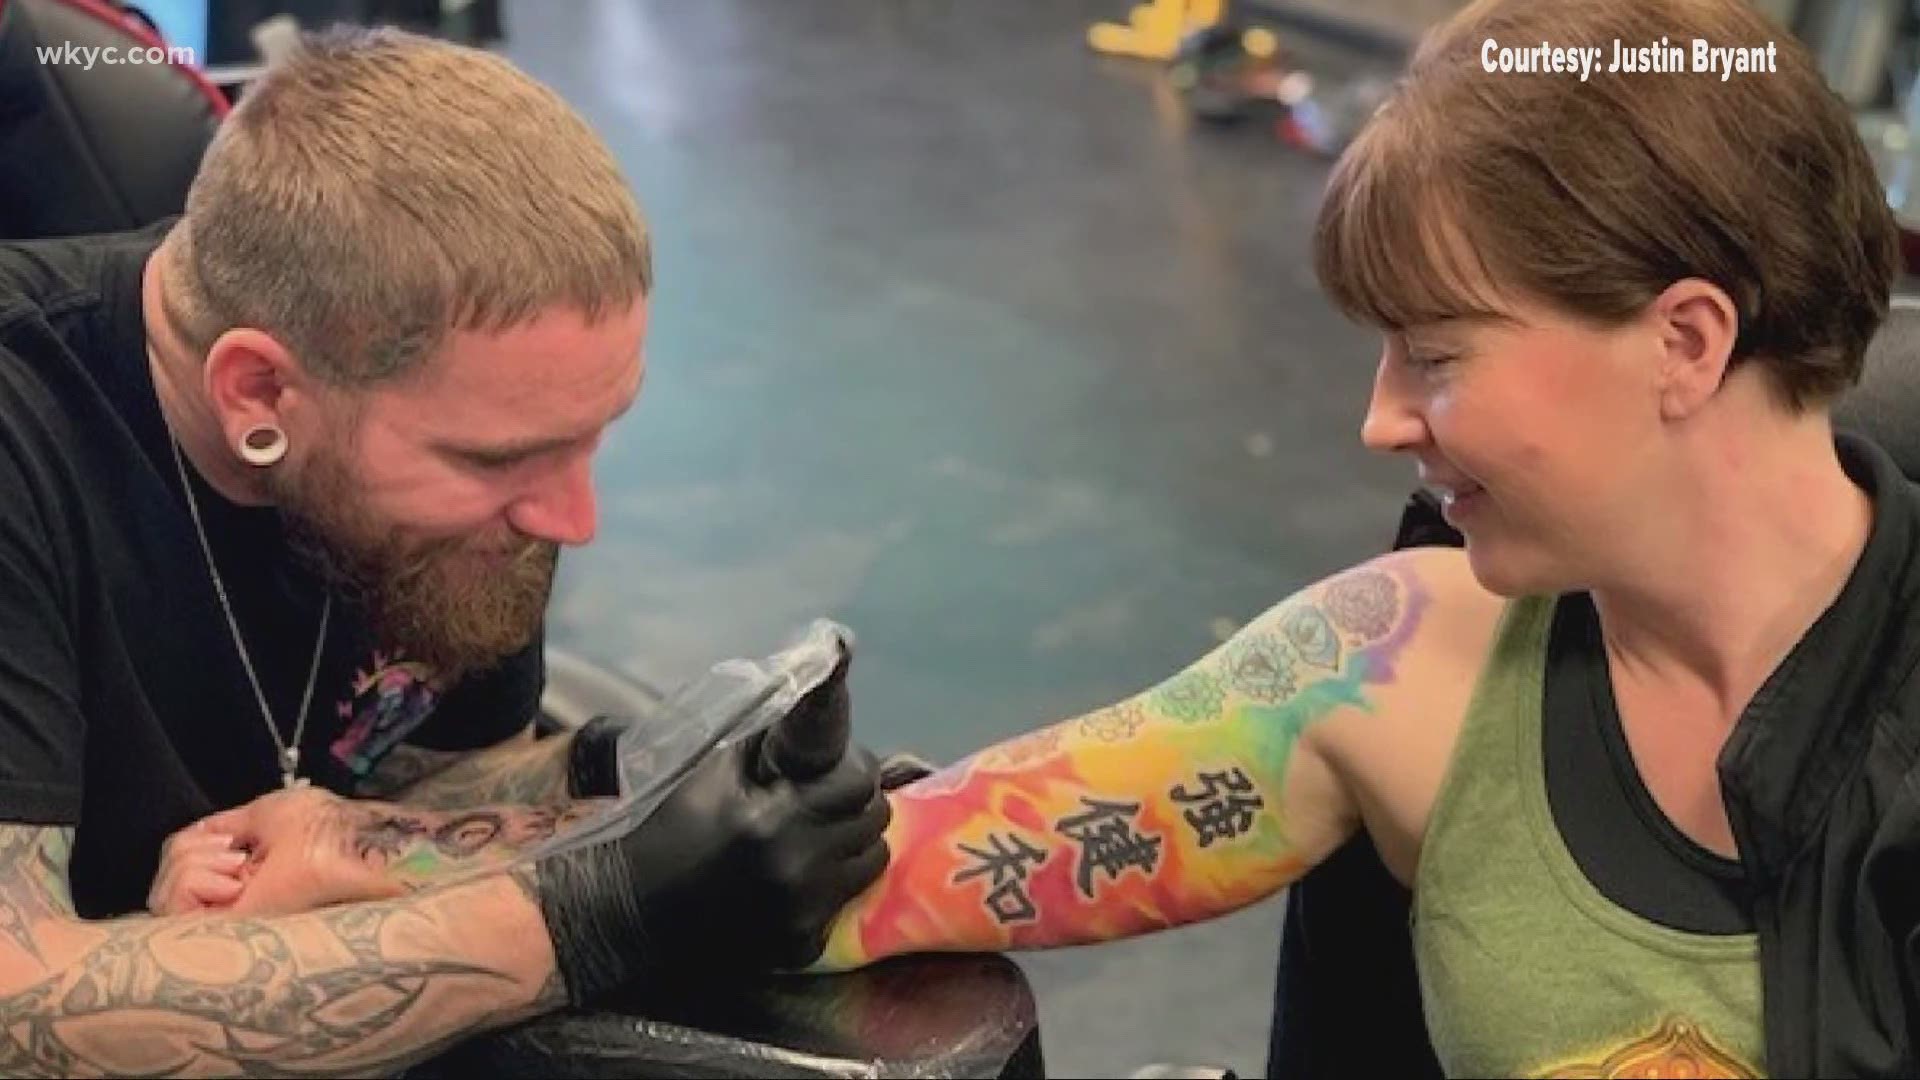 Third generation tattoo artist celebrates shop reopening